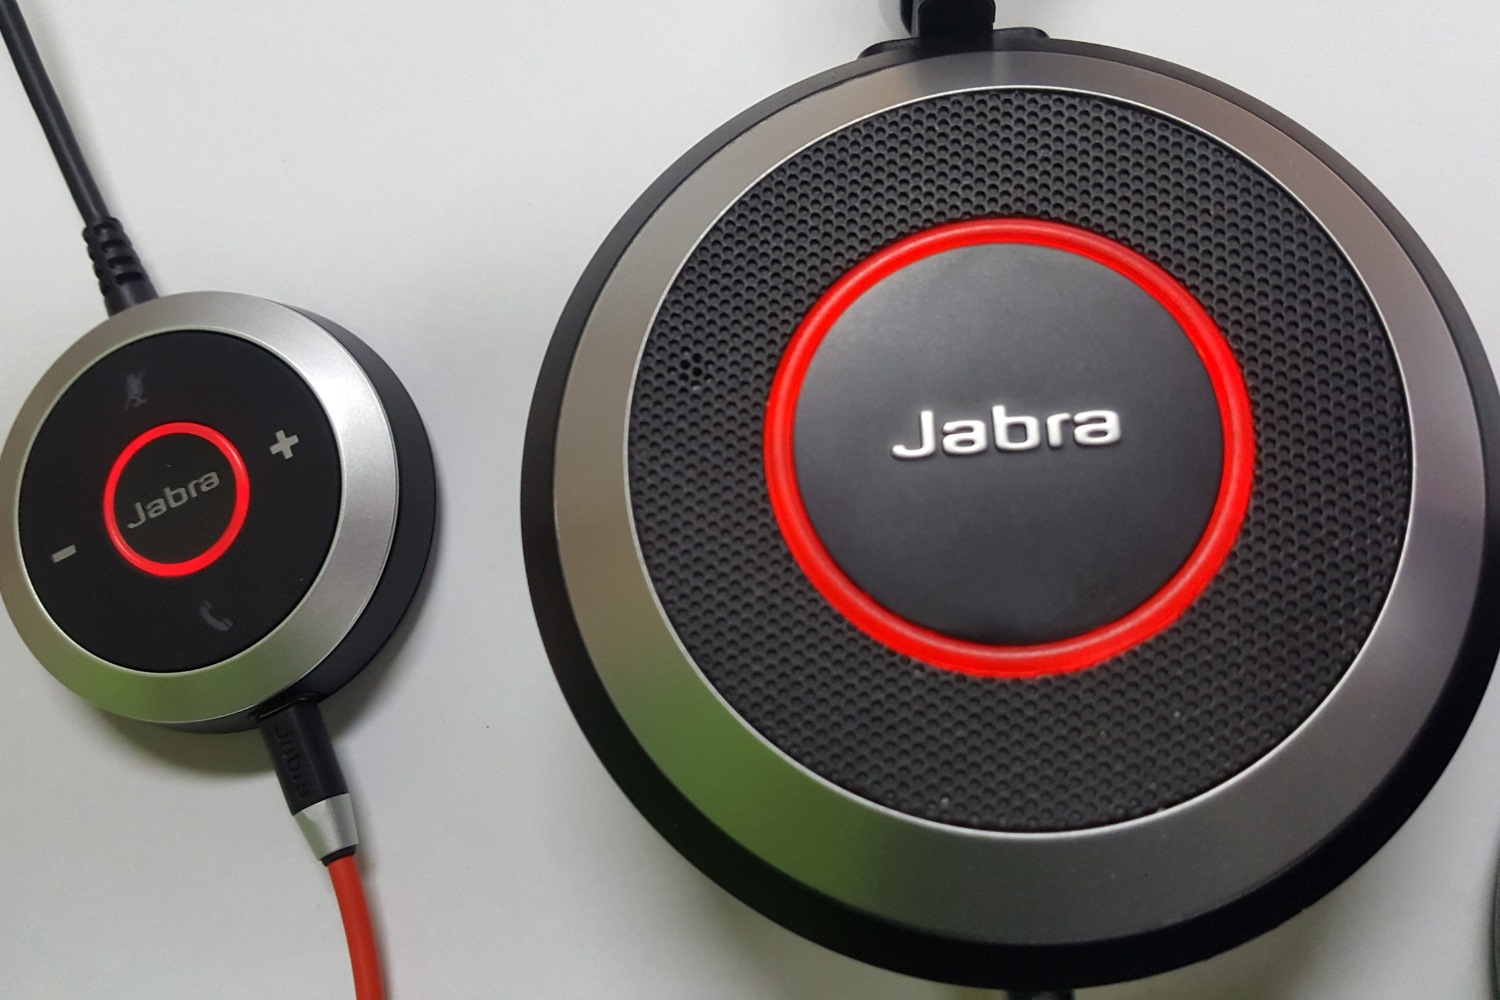 Decoding The Red Light Indicator On Jabra Headsets